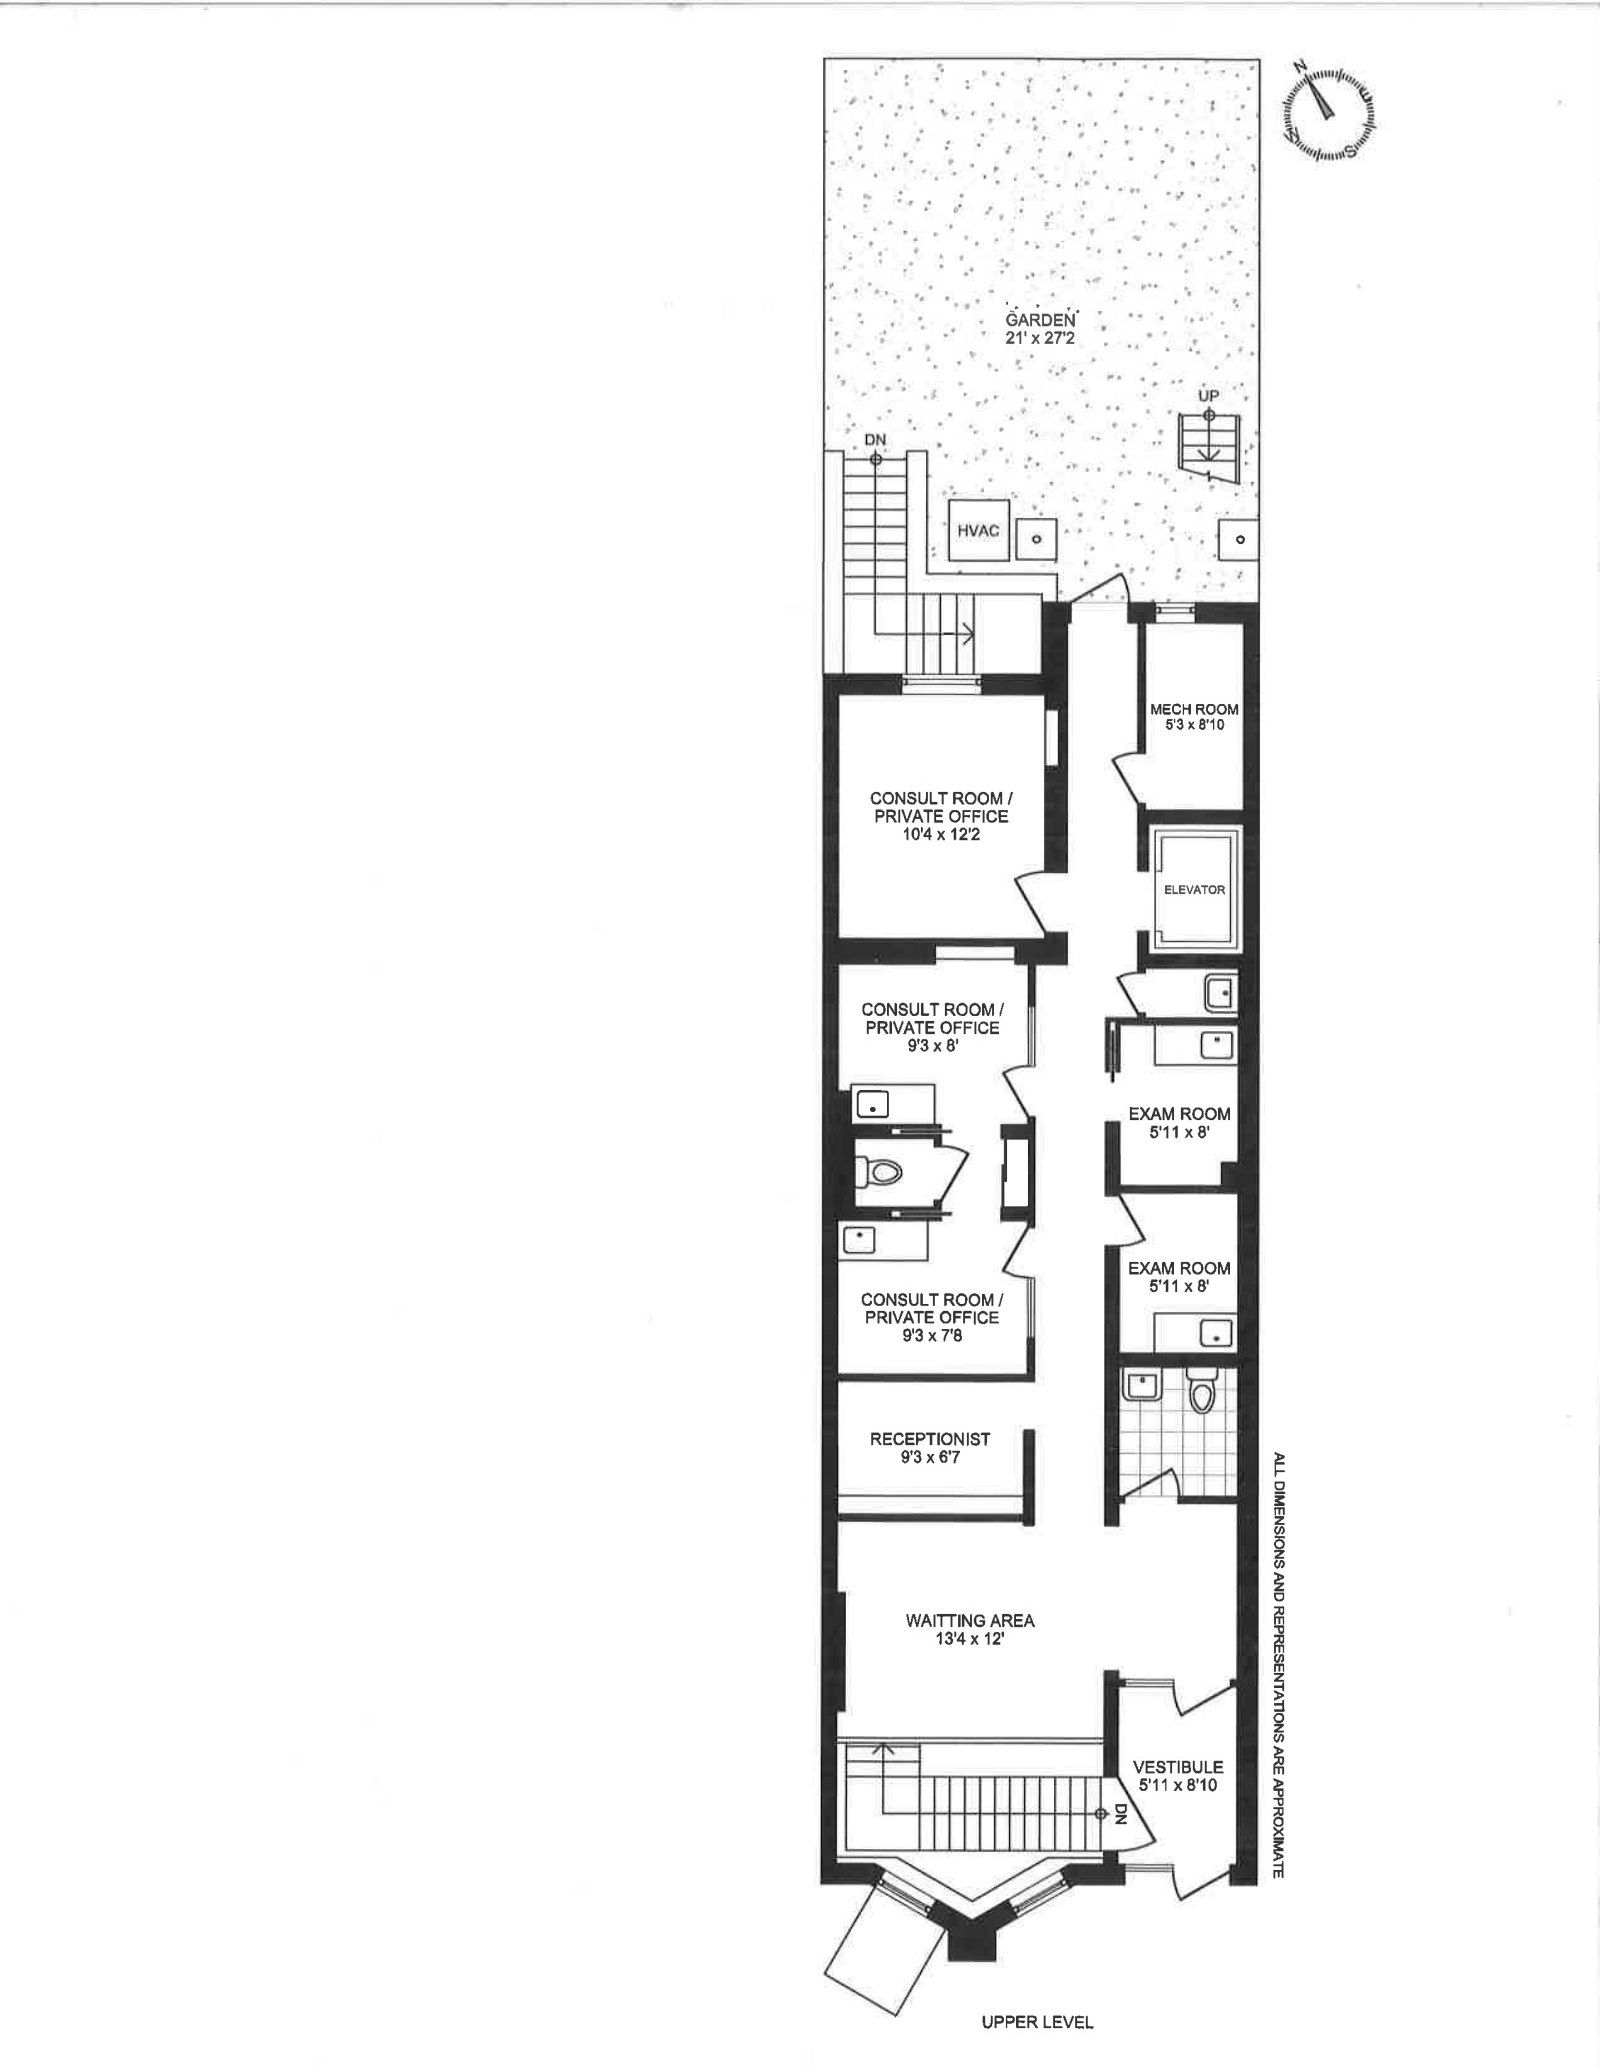 Floorplan for 207 Berkeley Pl, UPPERSUITE